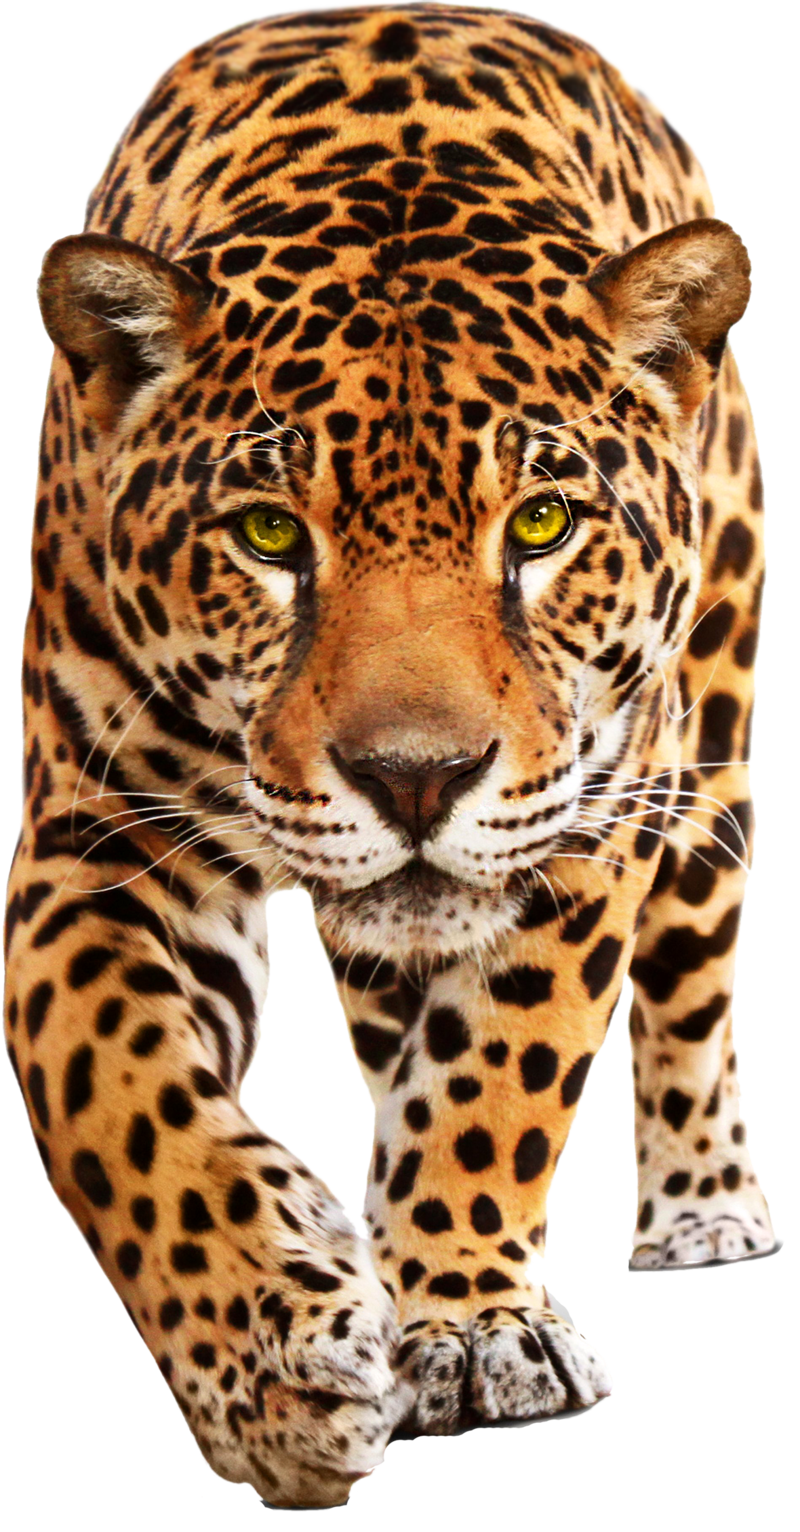 Angry Cheetah PNG Transparent Image